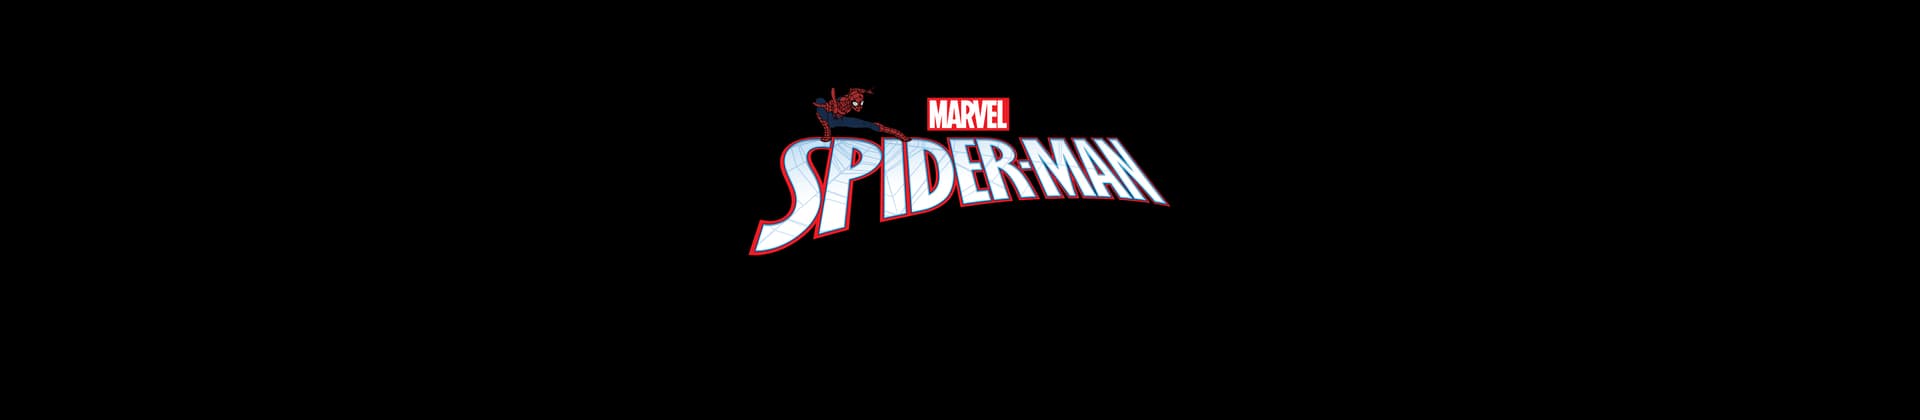 Animated Spider-Man TV Show Logo On Black